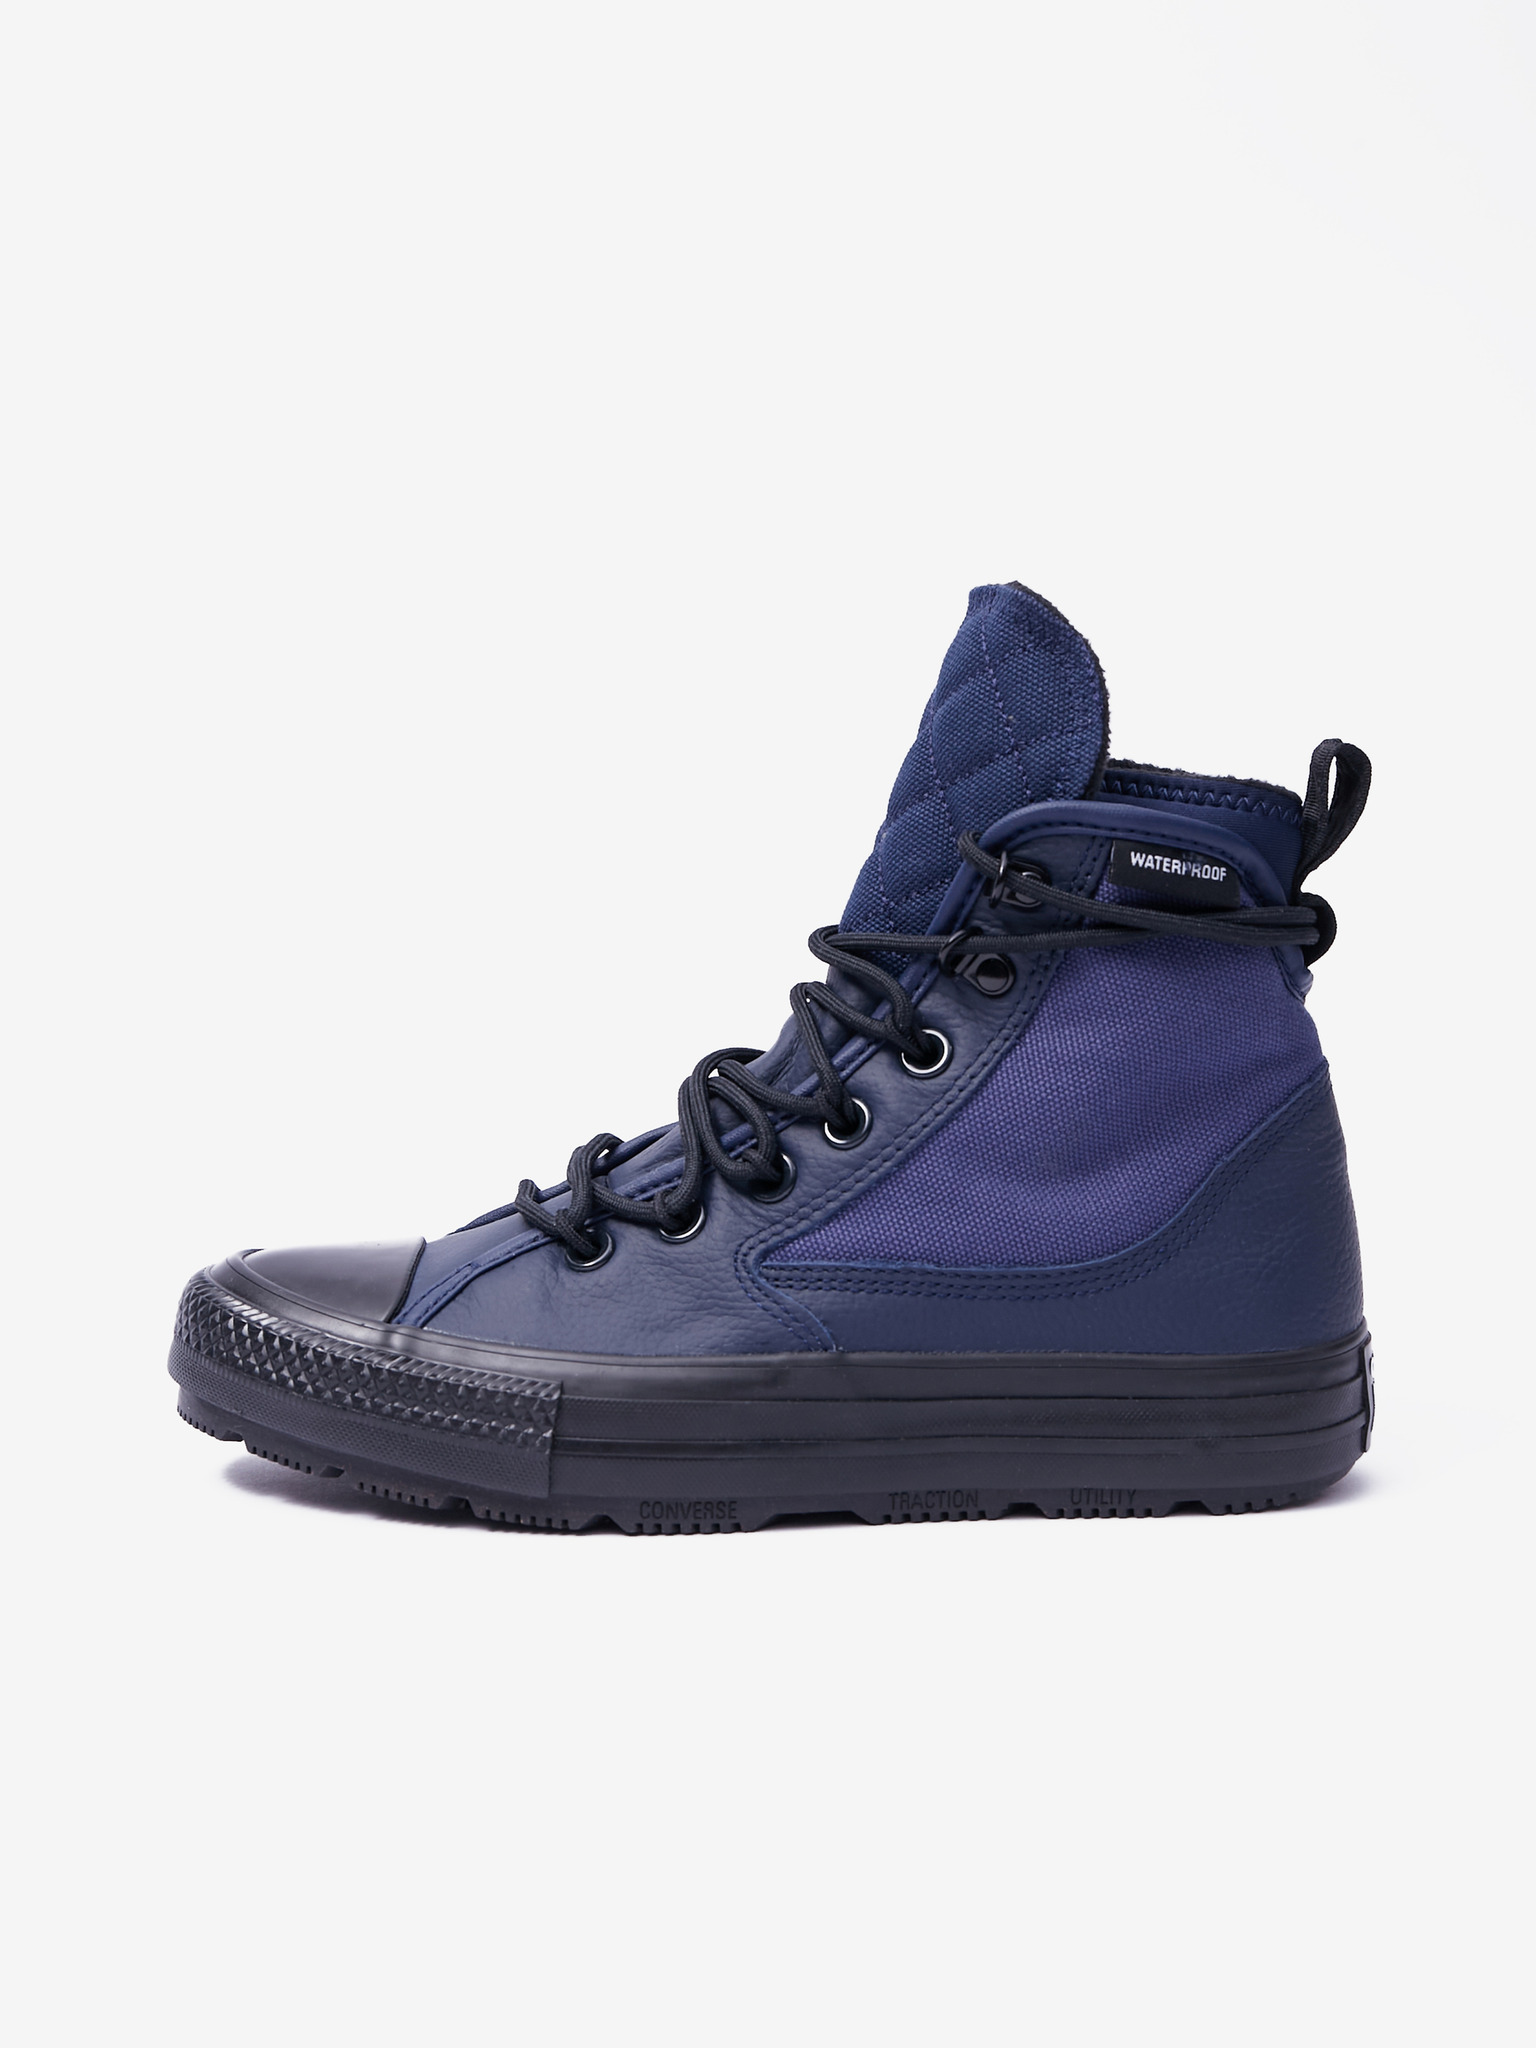 New Balance Shoes Womens 6.5 Blue Gray Nitrel Trail Hiker All Terrain  Sneakers | eBay